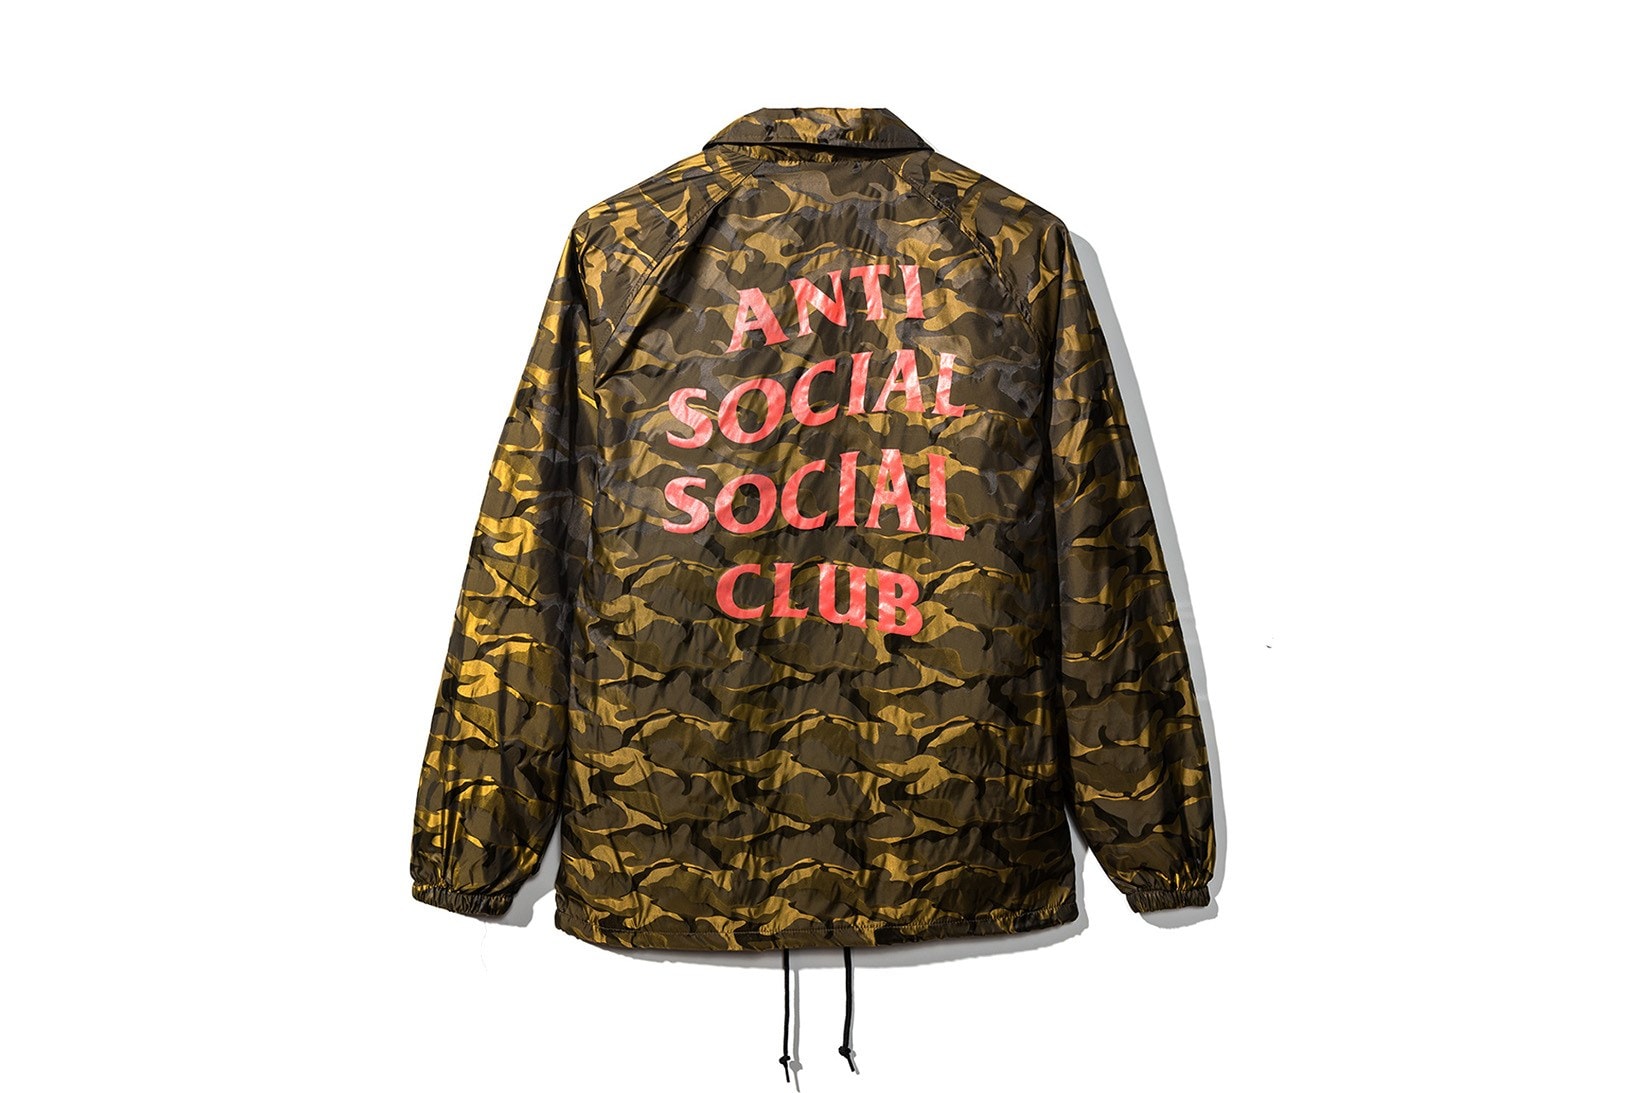 ANTI SOCIAL SOCIAL CLUB 2017 Spring/Summer Collection